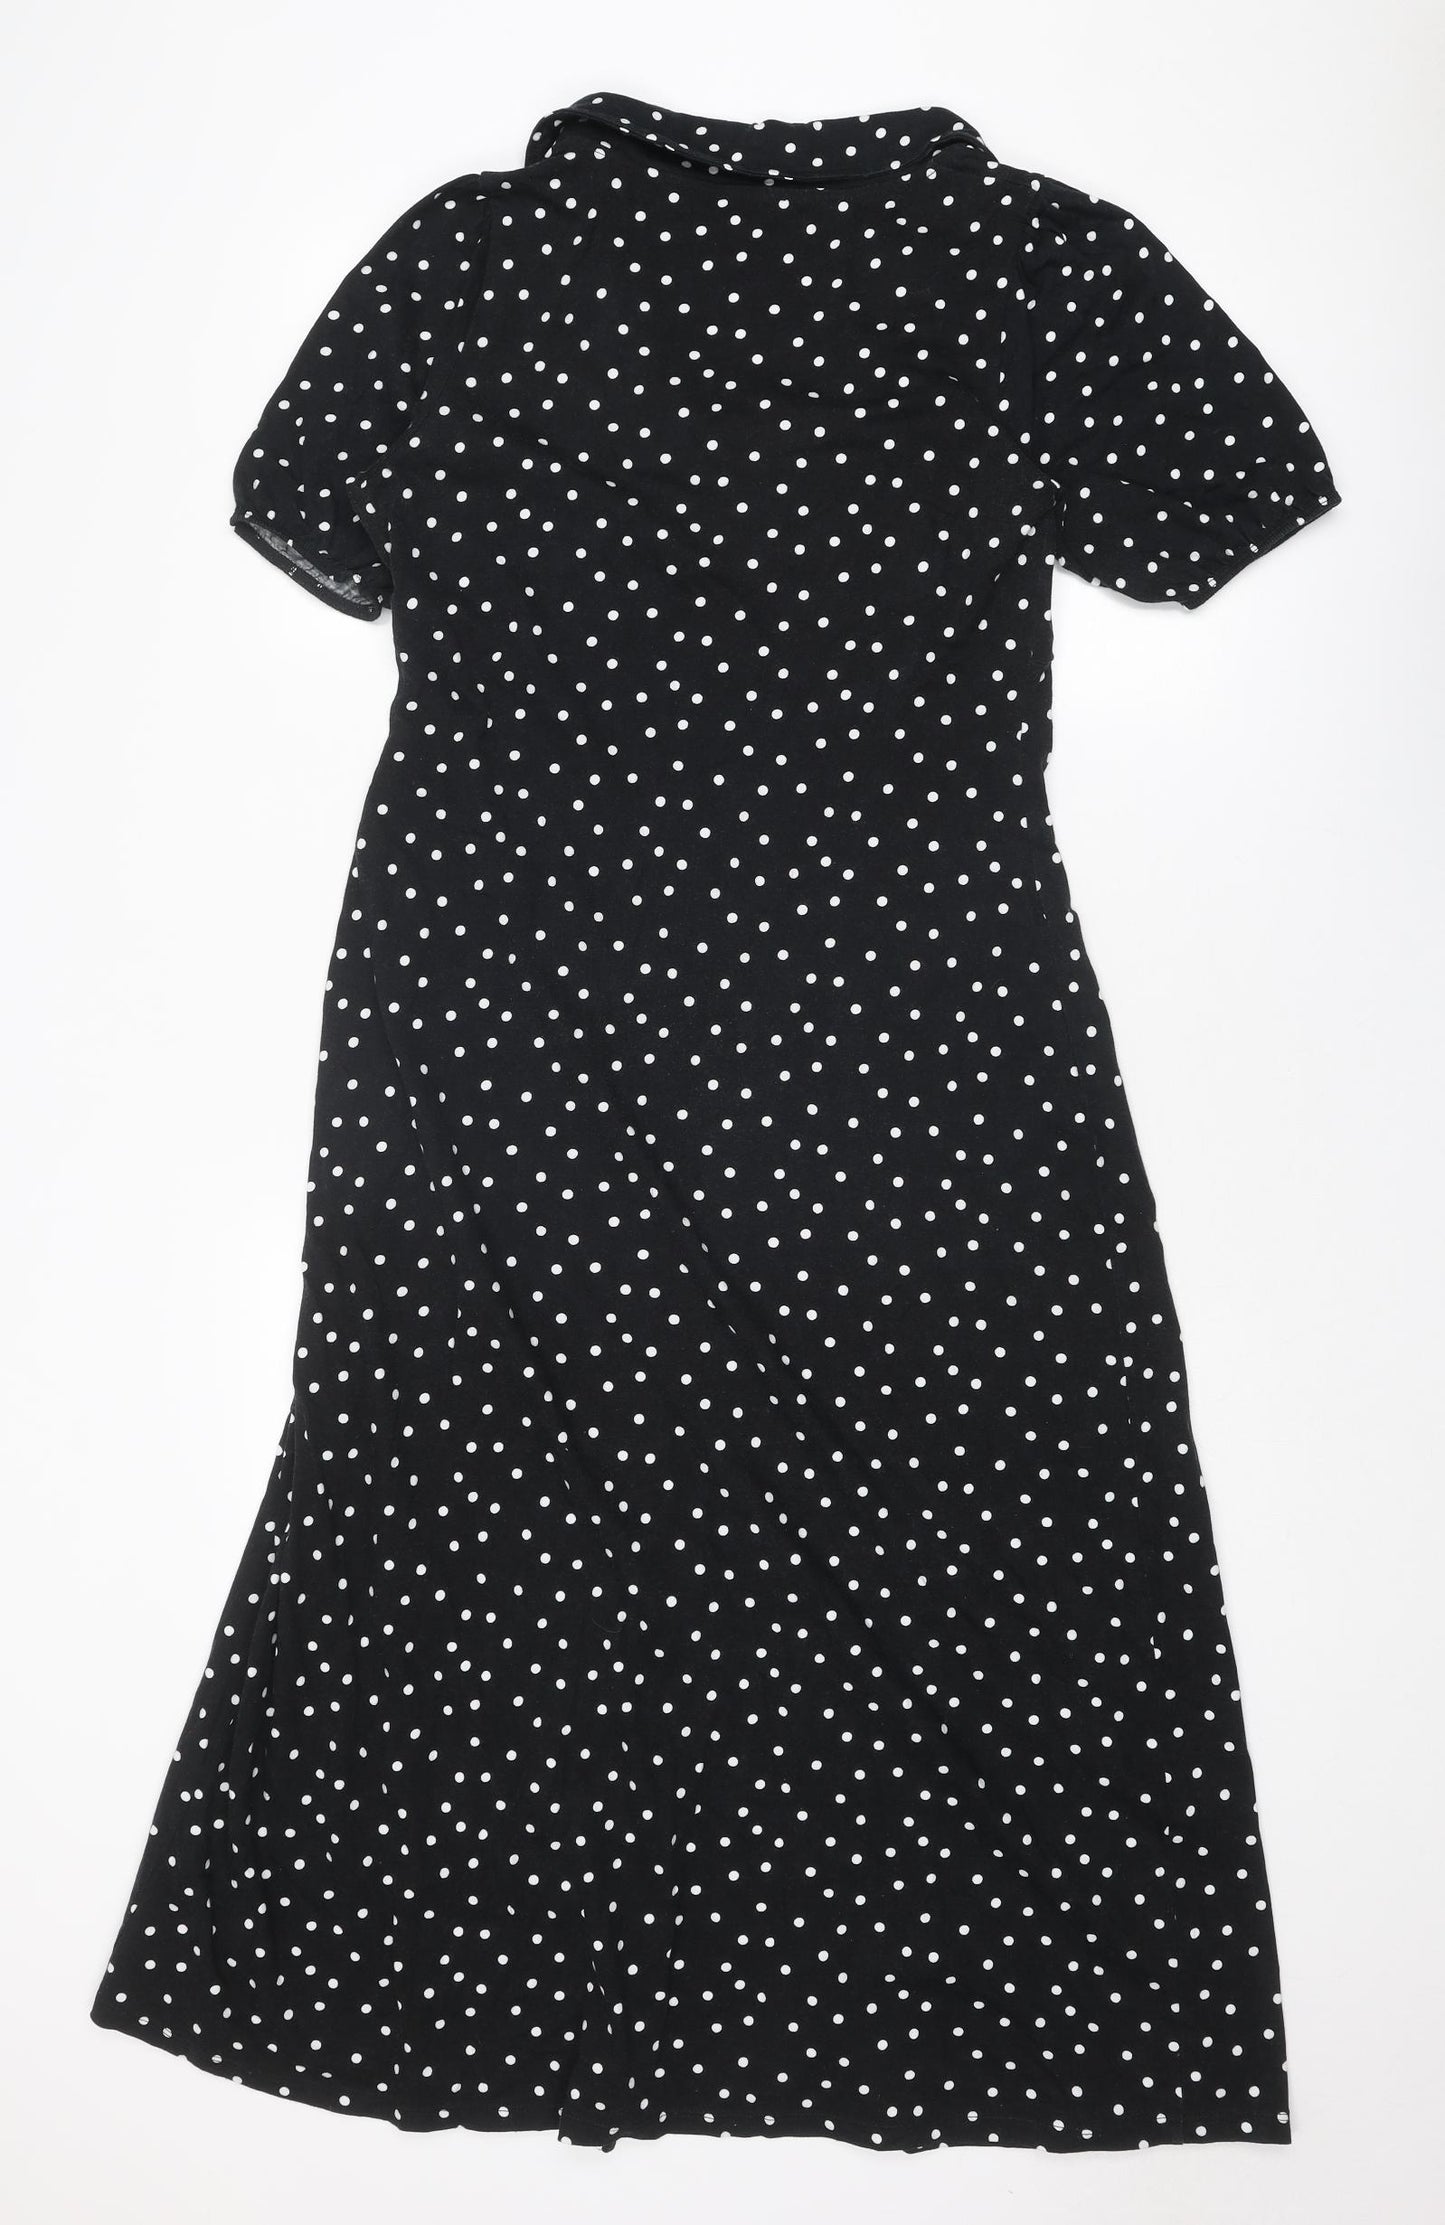 ASOS Womens Black Polka Dot Cotton Shirt Dress Size 10 Collared Pullover